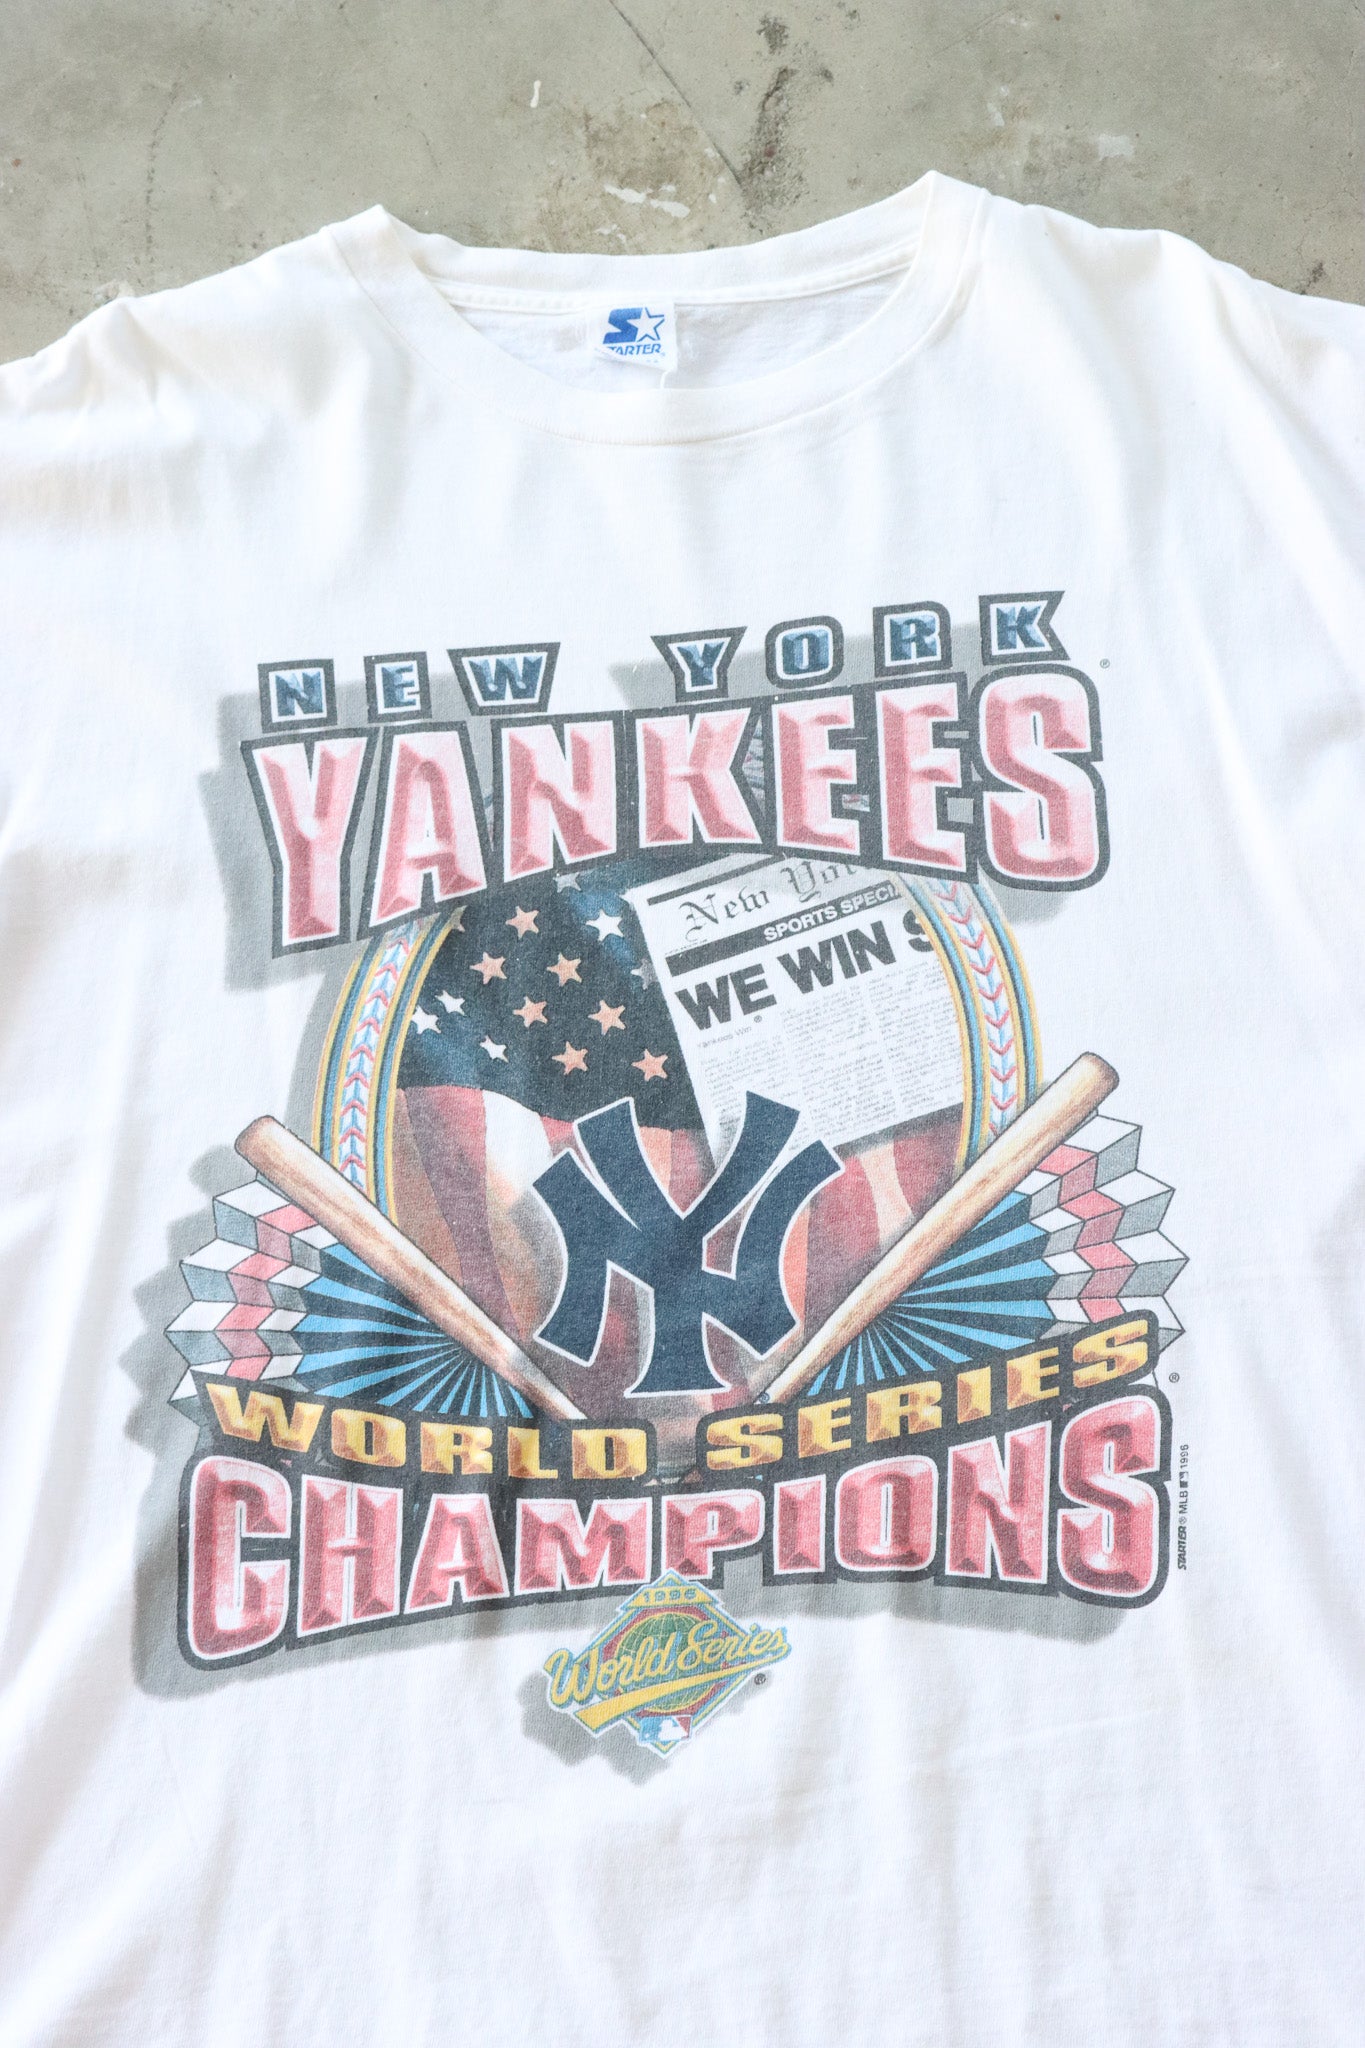 Vintage 1996 NY Yankees Tee XL